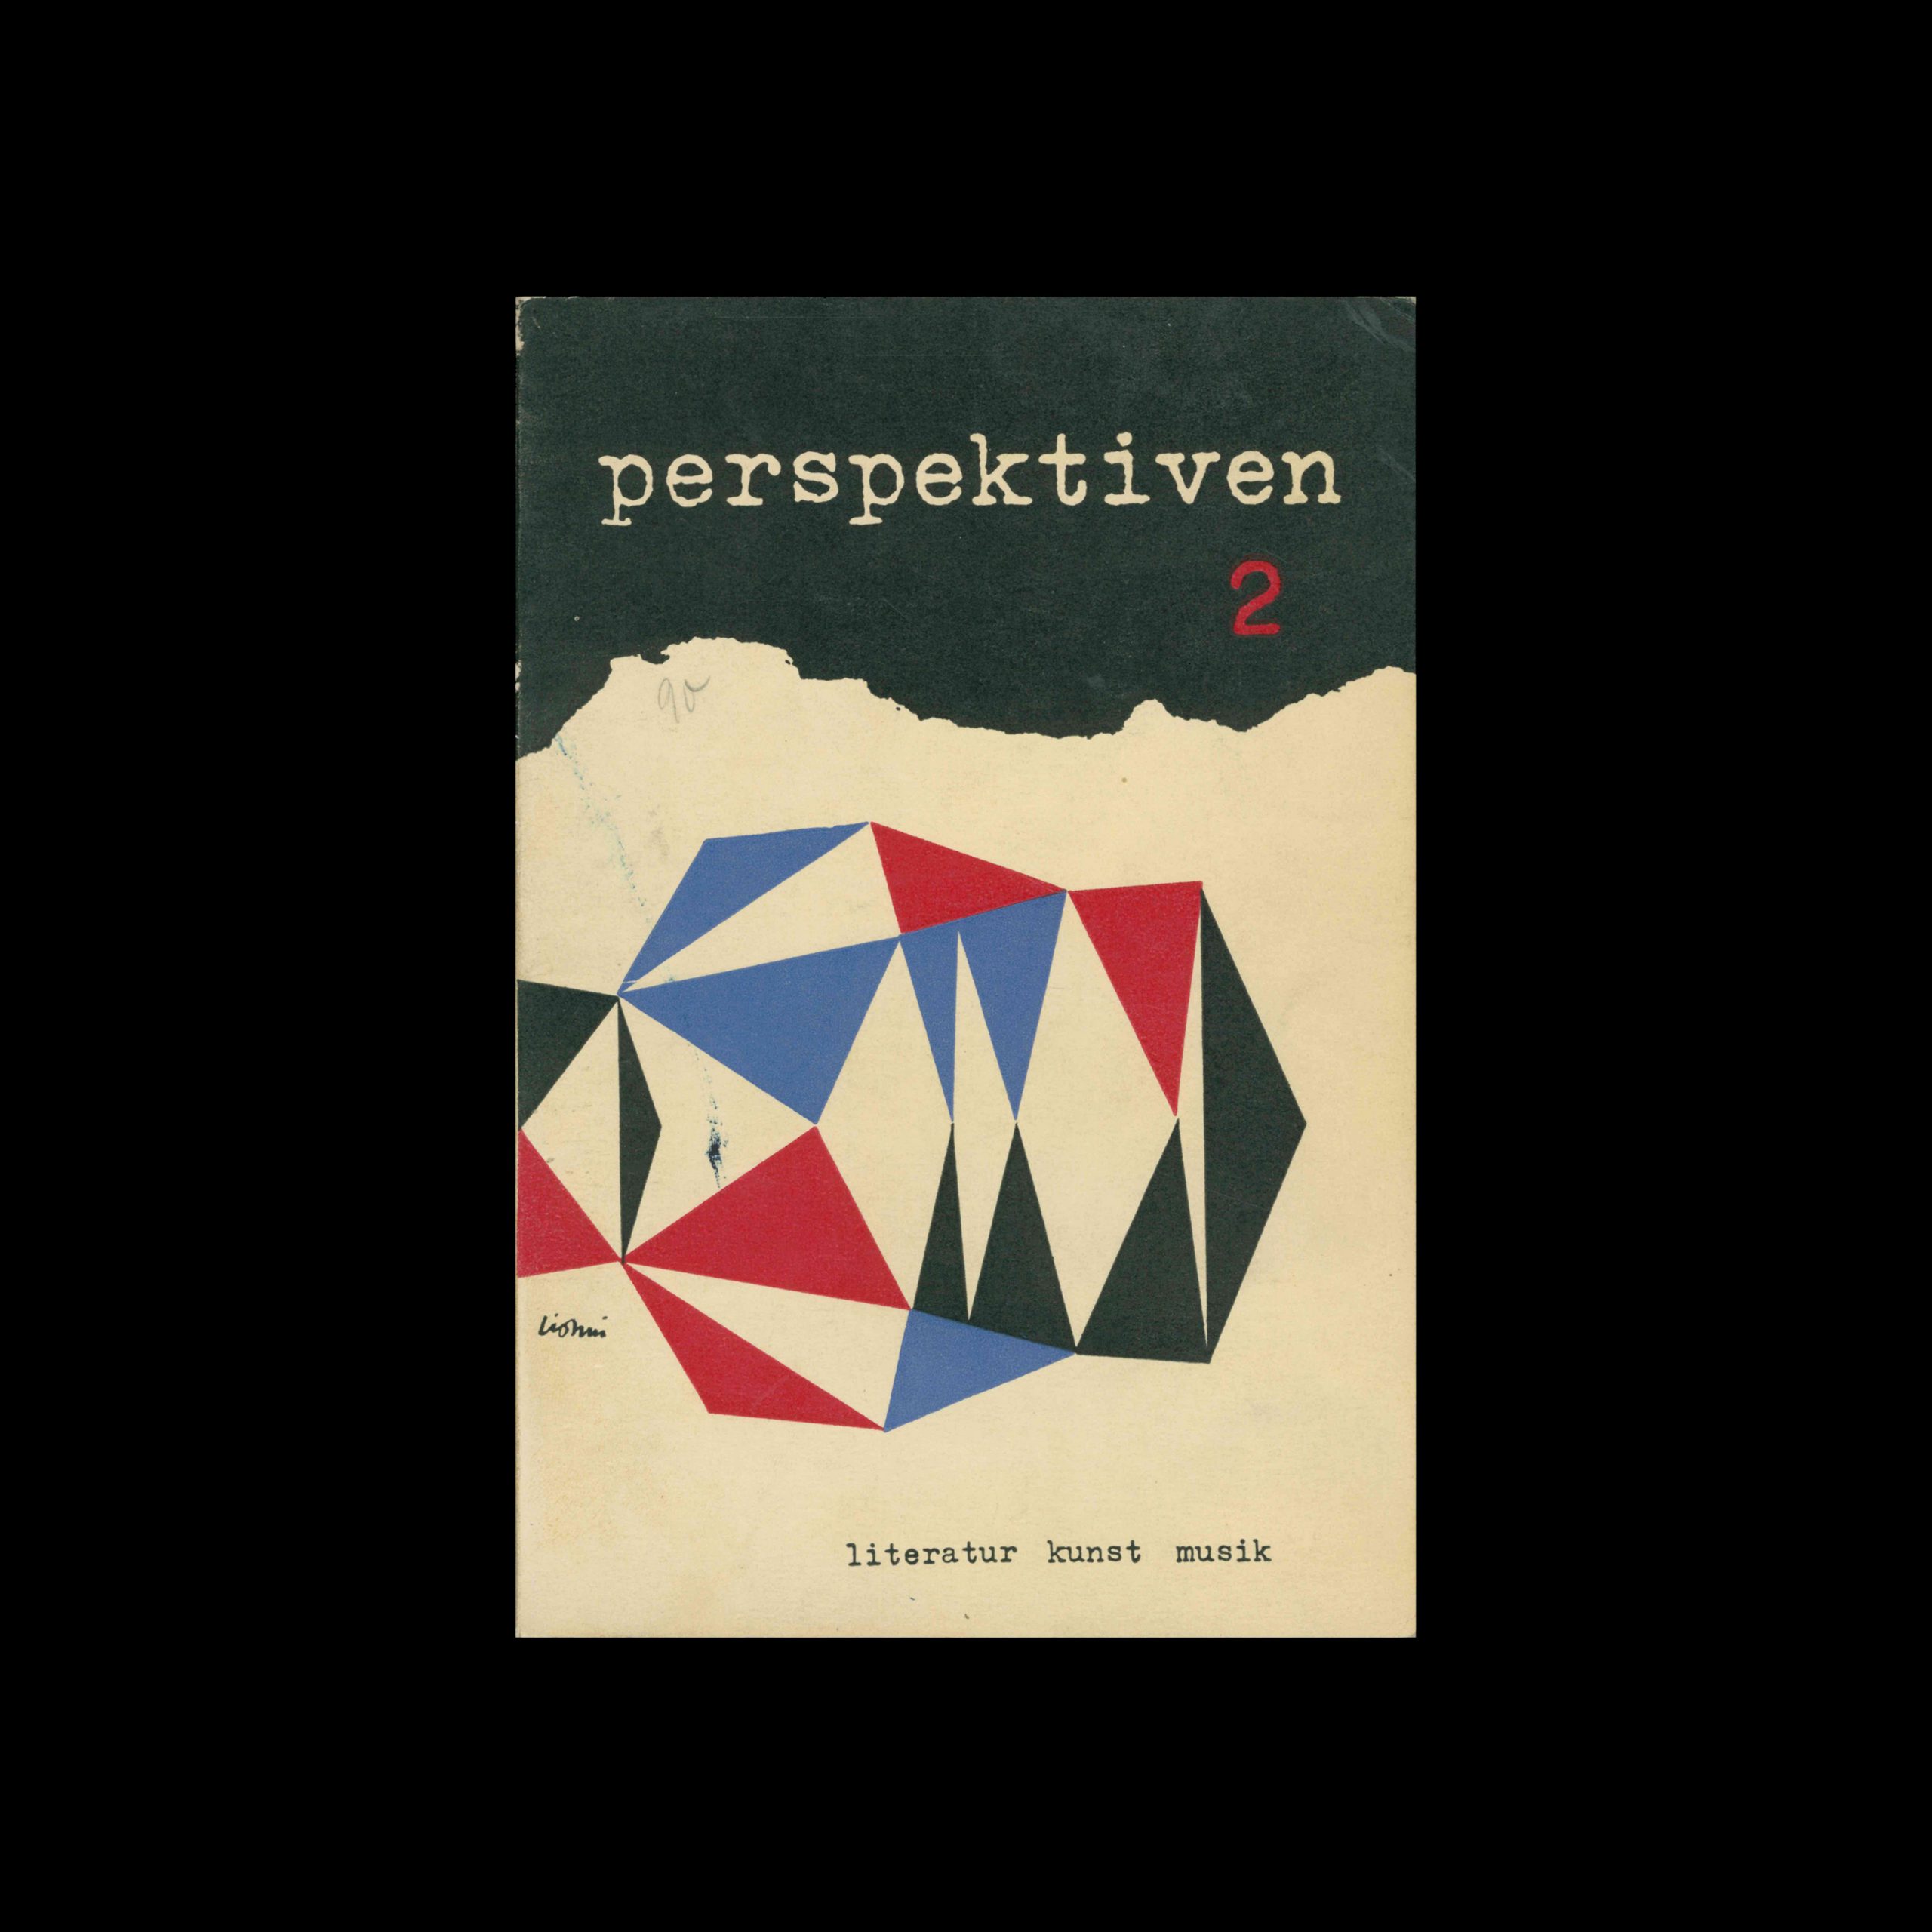 Perspektiven, Literatur, Kunst, Musik, 2, 1953. Cover design by Leo Lionni